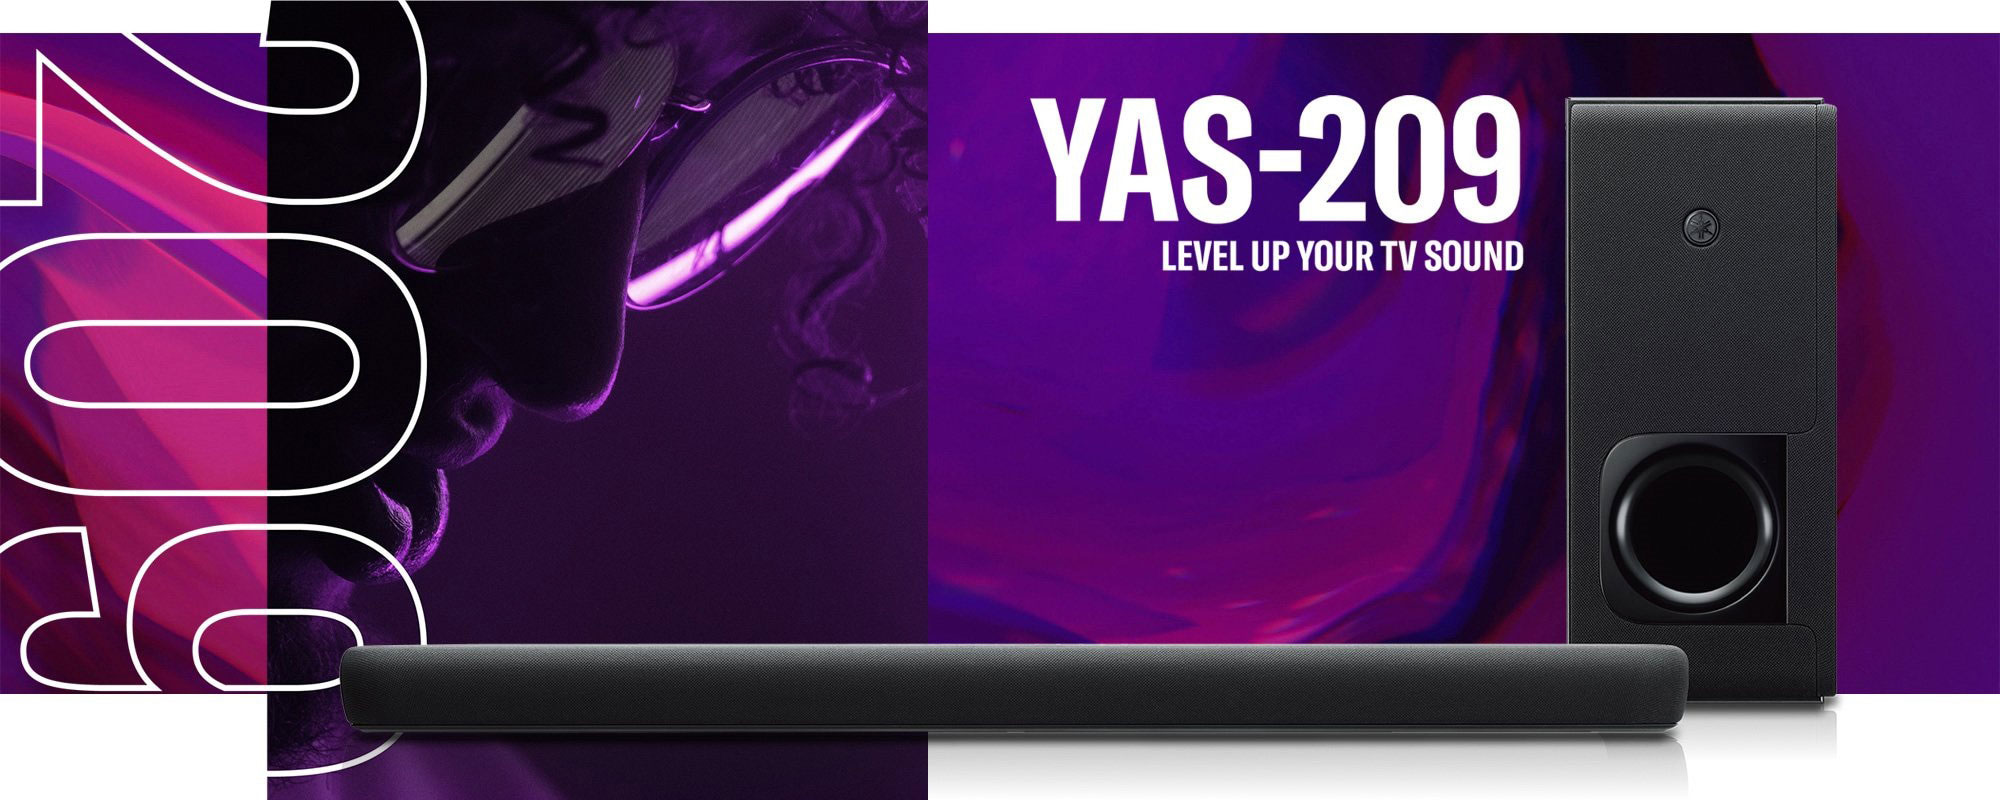 Yamaha Sound BAr YAS-209 Upgrade to Crystal clear TV Sound